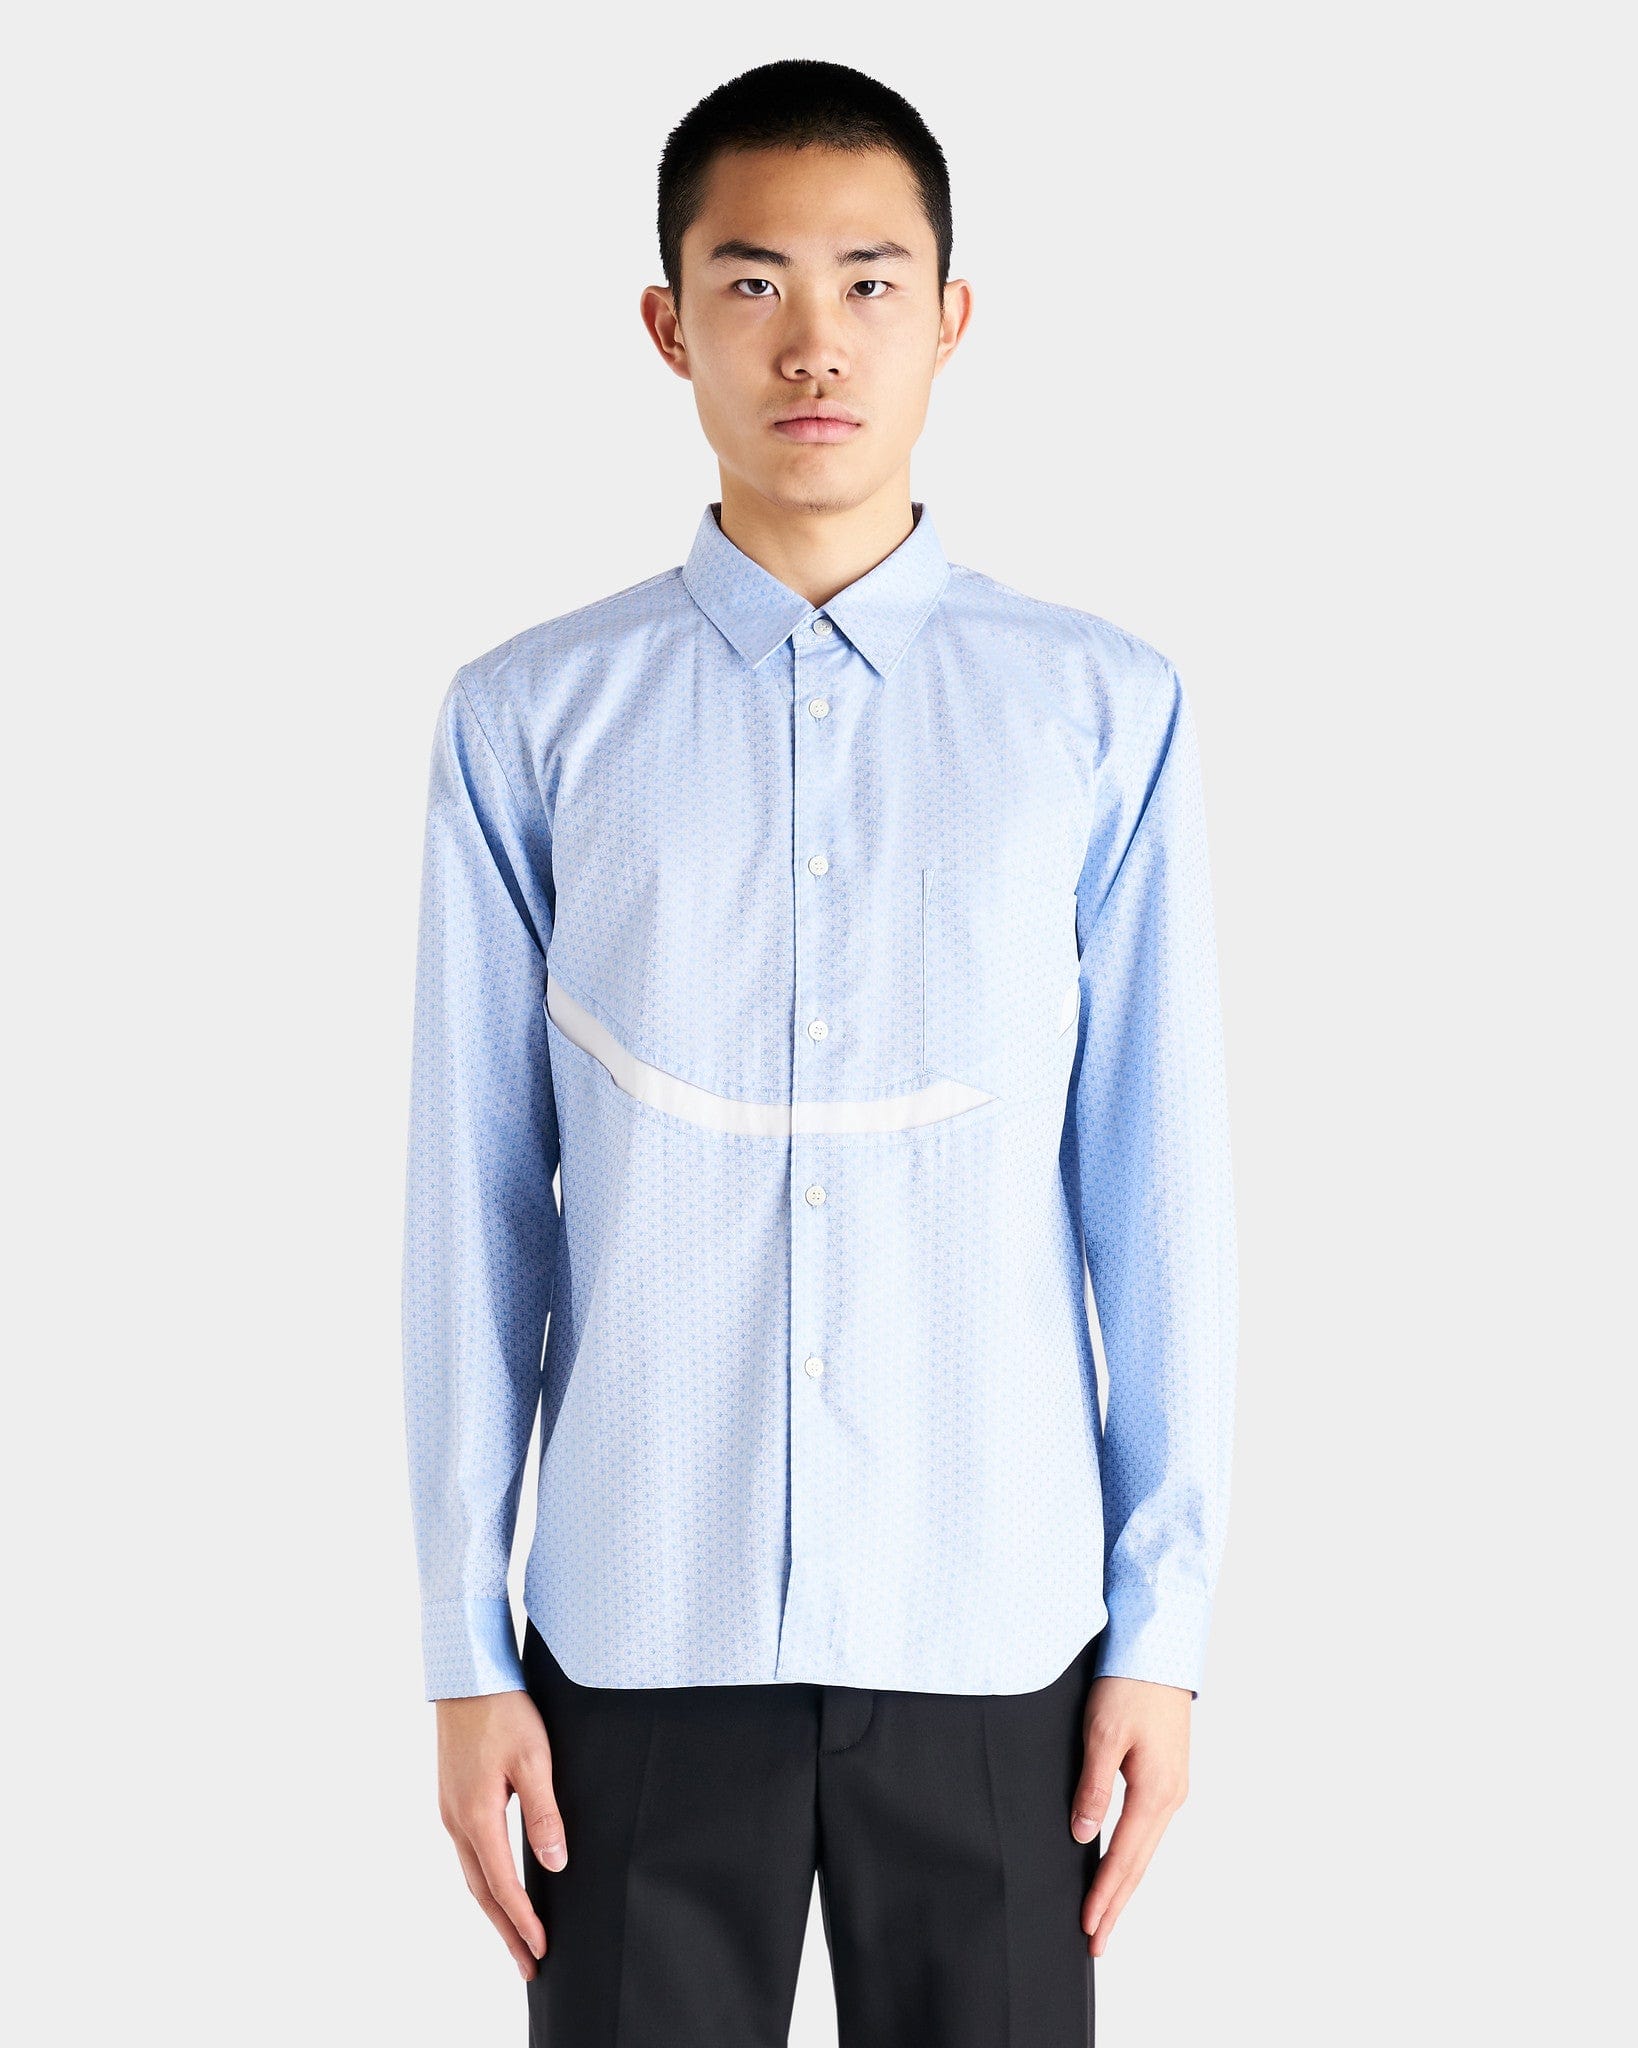 Denim Jacquard Woven Overshirt in Light Blue – SVRN